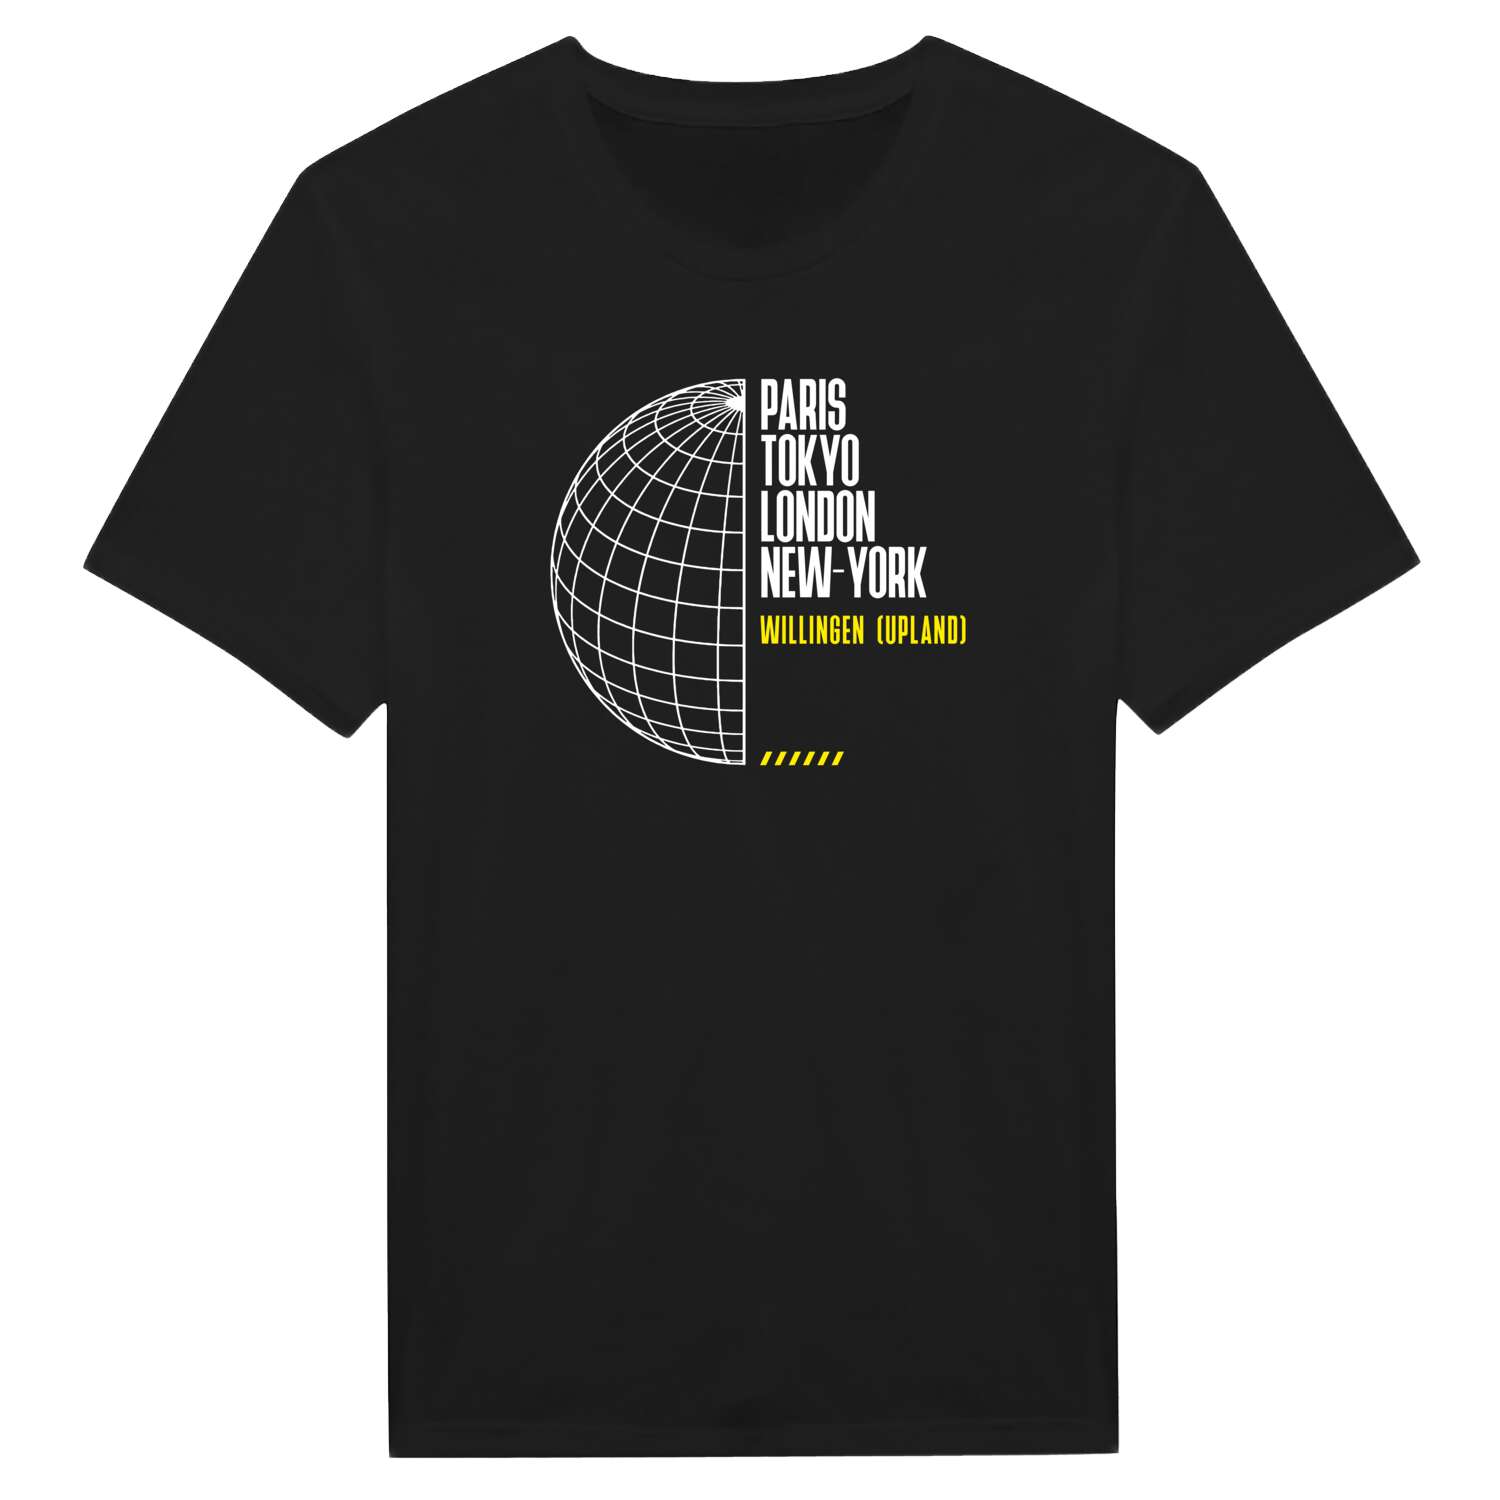 Willingen (Upland) T-Shirt »Paris Tokyo London«